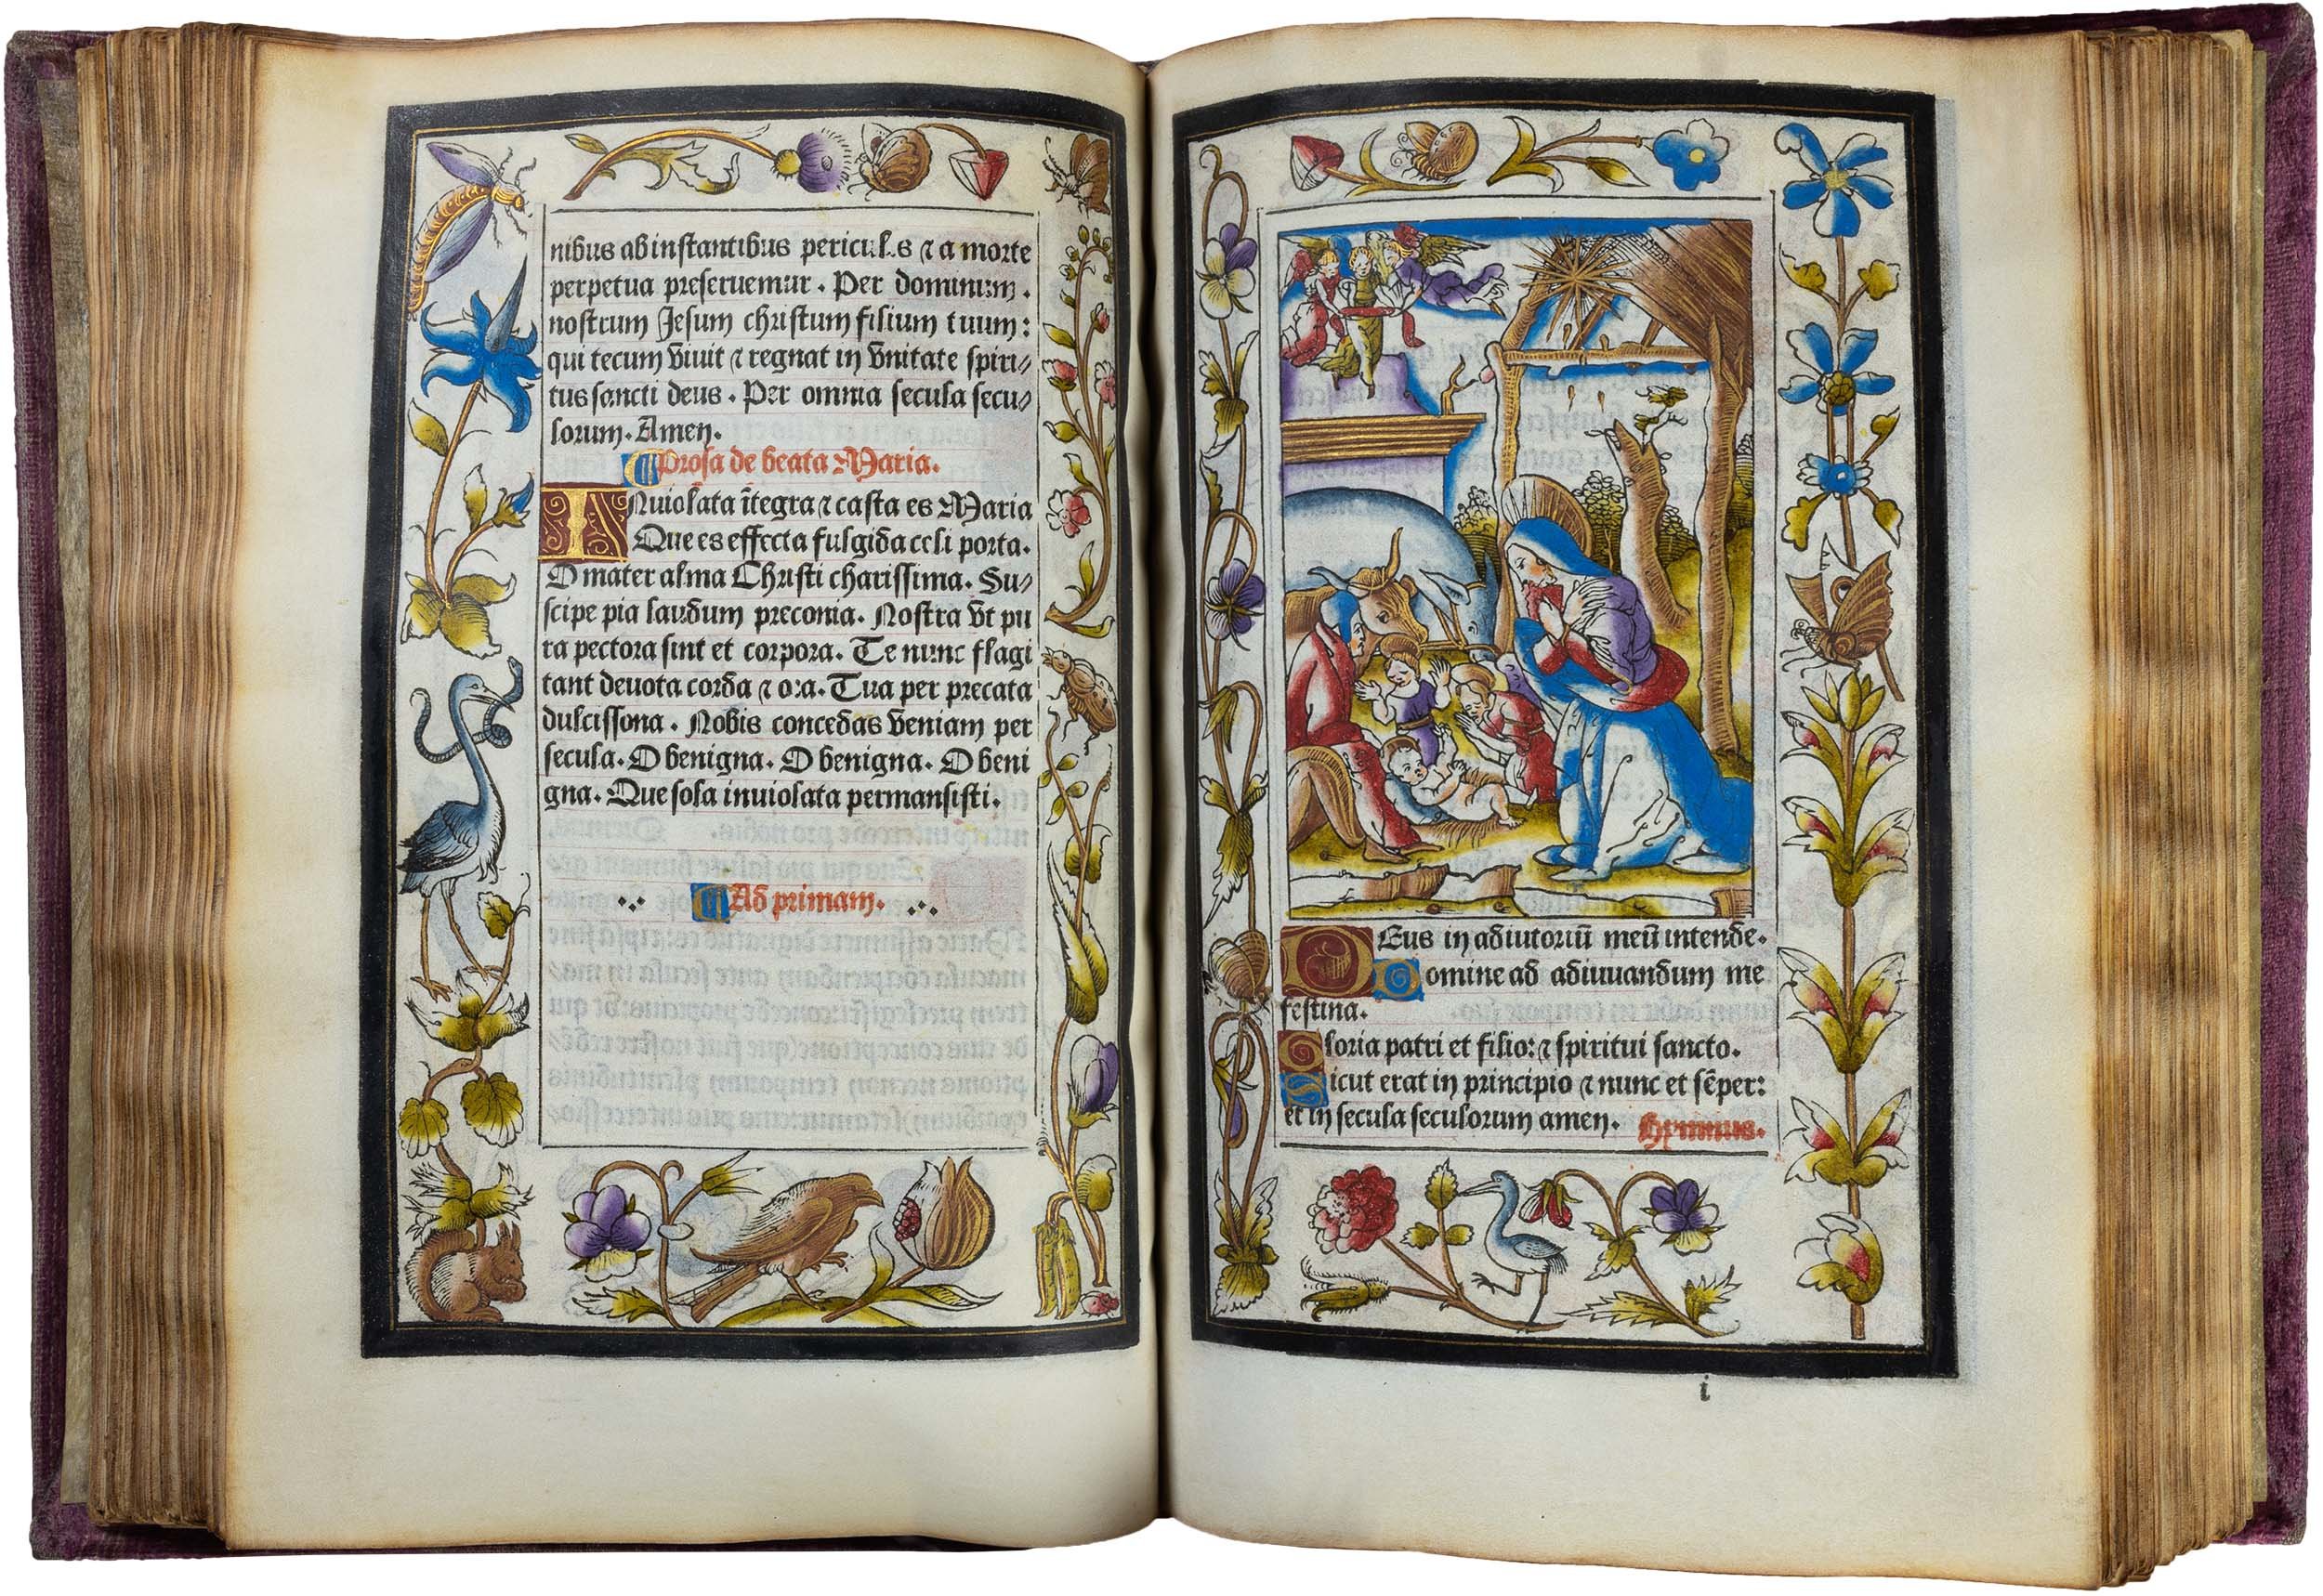 geoffroy-tory-printed-book-of-hours-illuminated-vellum-22-october-1527-prince-dessing-villeneuve-horae-bmv-67.jpg